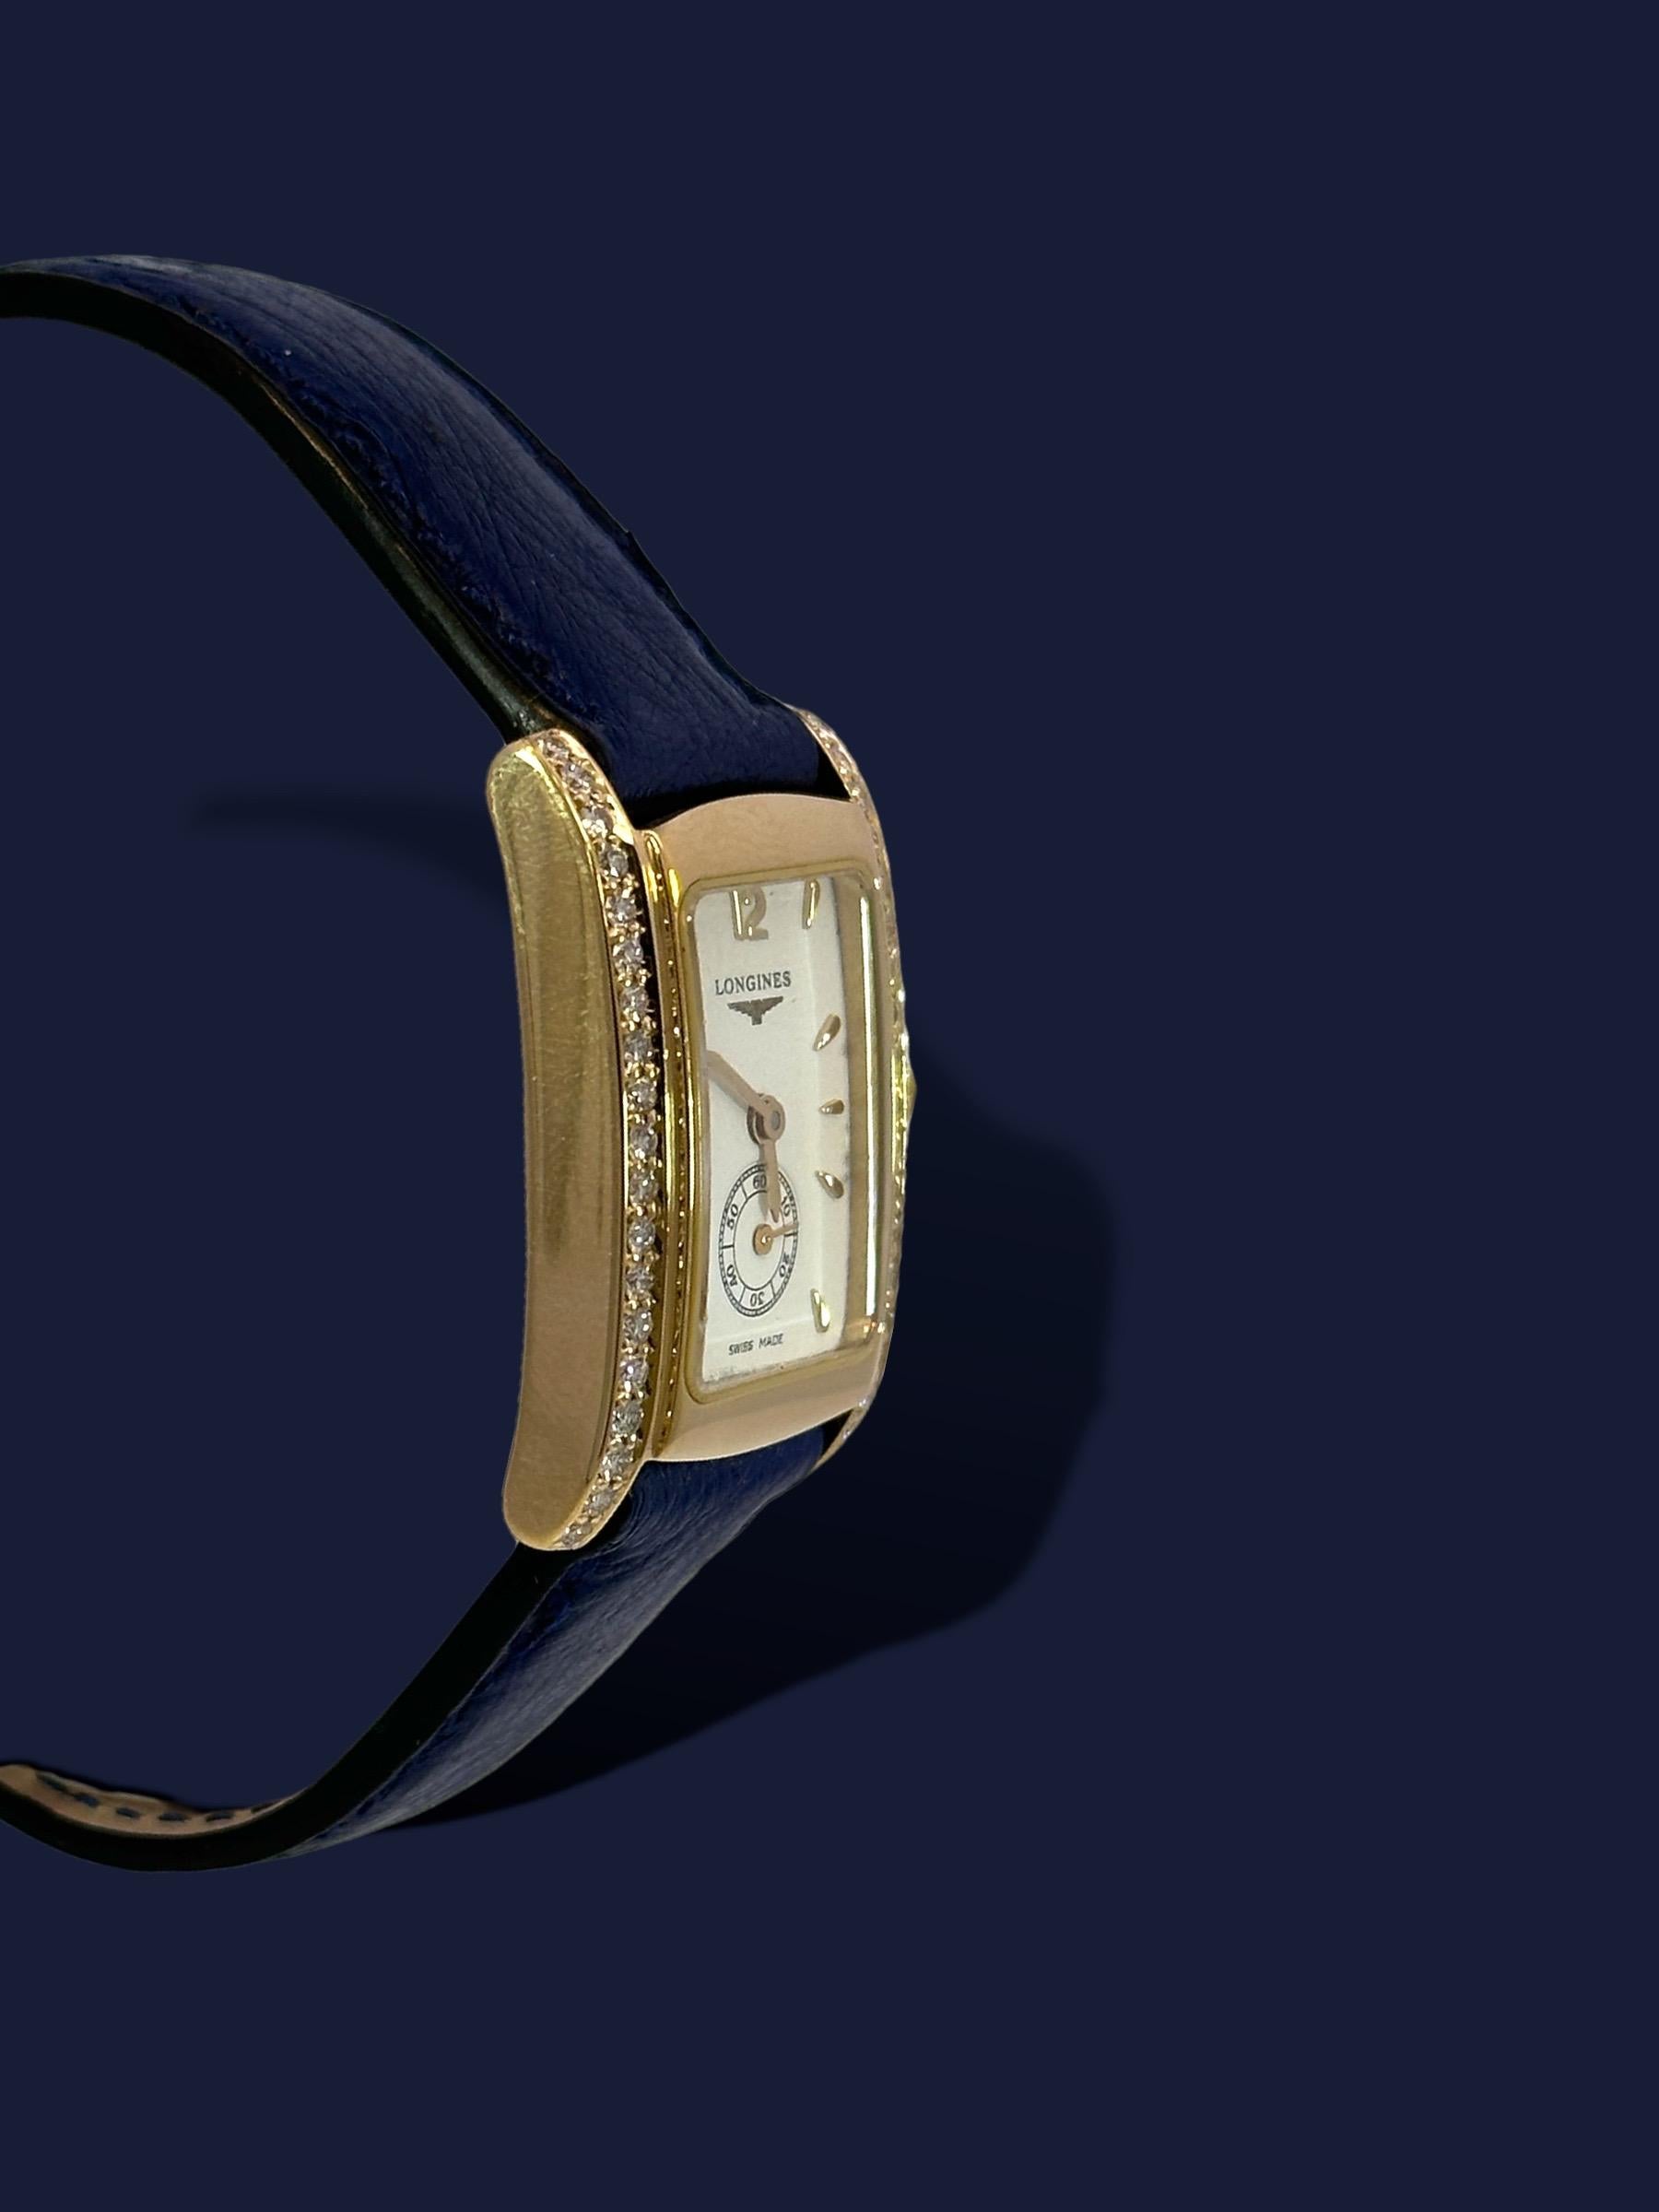 Brilliant Cut 18kt Yellow Gold Longines Dolce Vita Ladies Wrist Watch with Diamonds